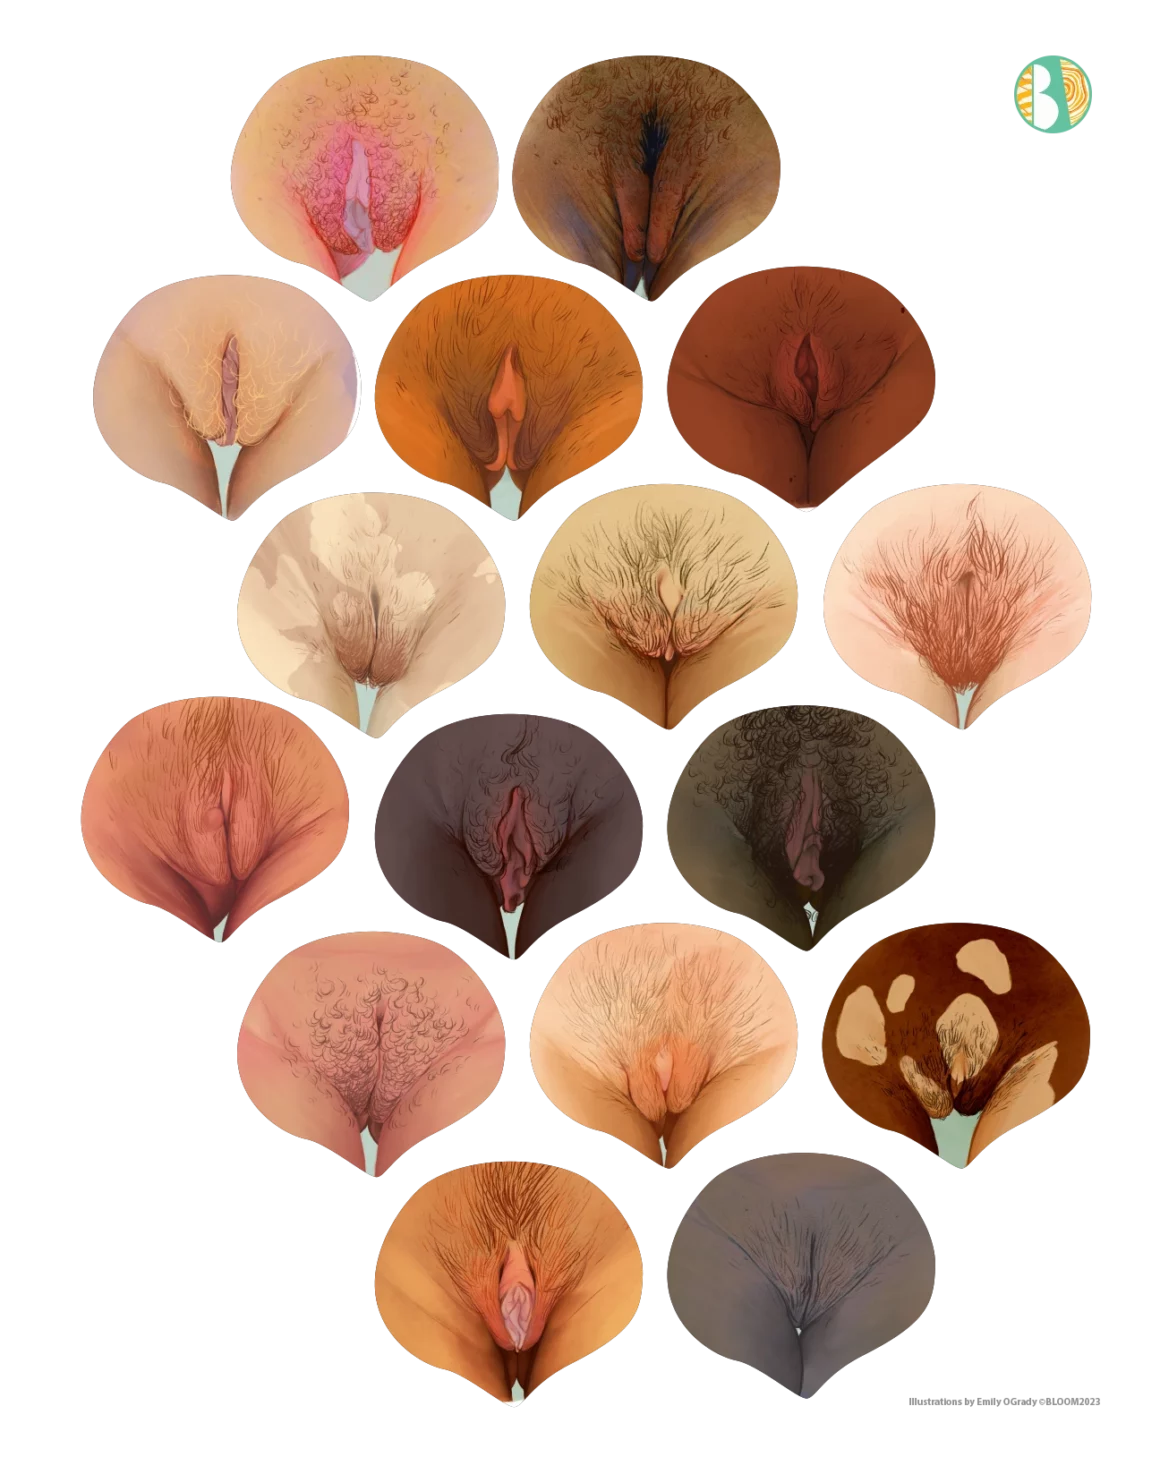 Celebrate Vulva Diversity. Illustration of diverse vulvas. 